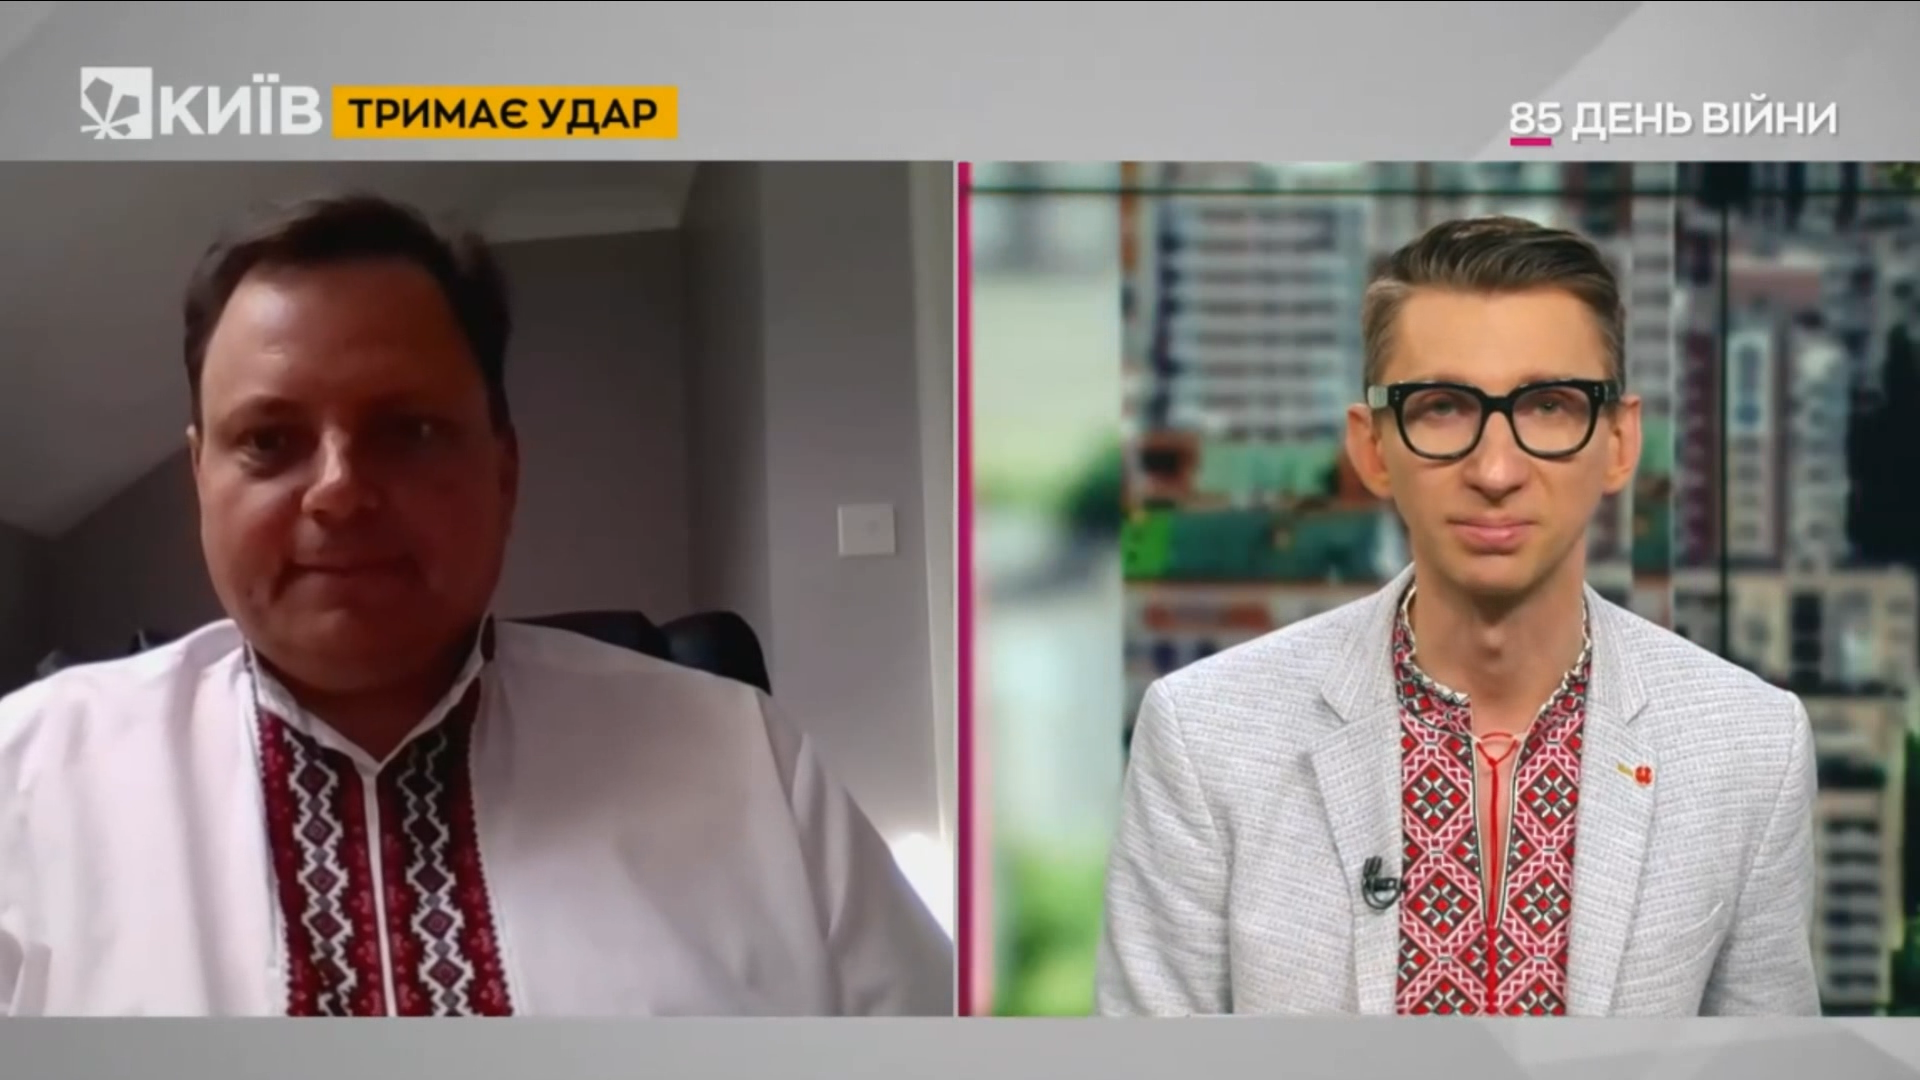 Interview by AmCham Ukraine President Andy Hunder for the TV Marathon “Edyni Novyny” broadcast. Kyiv channel